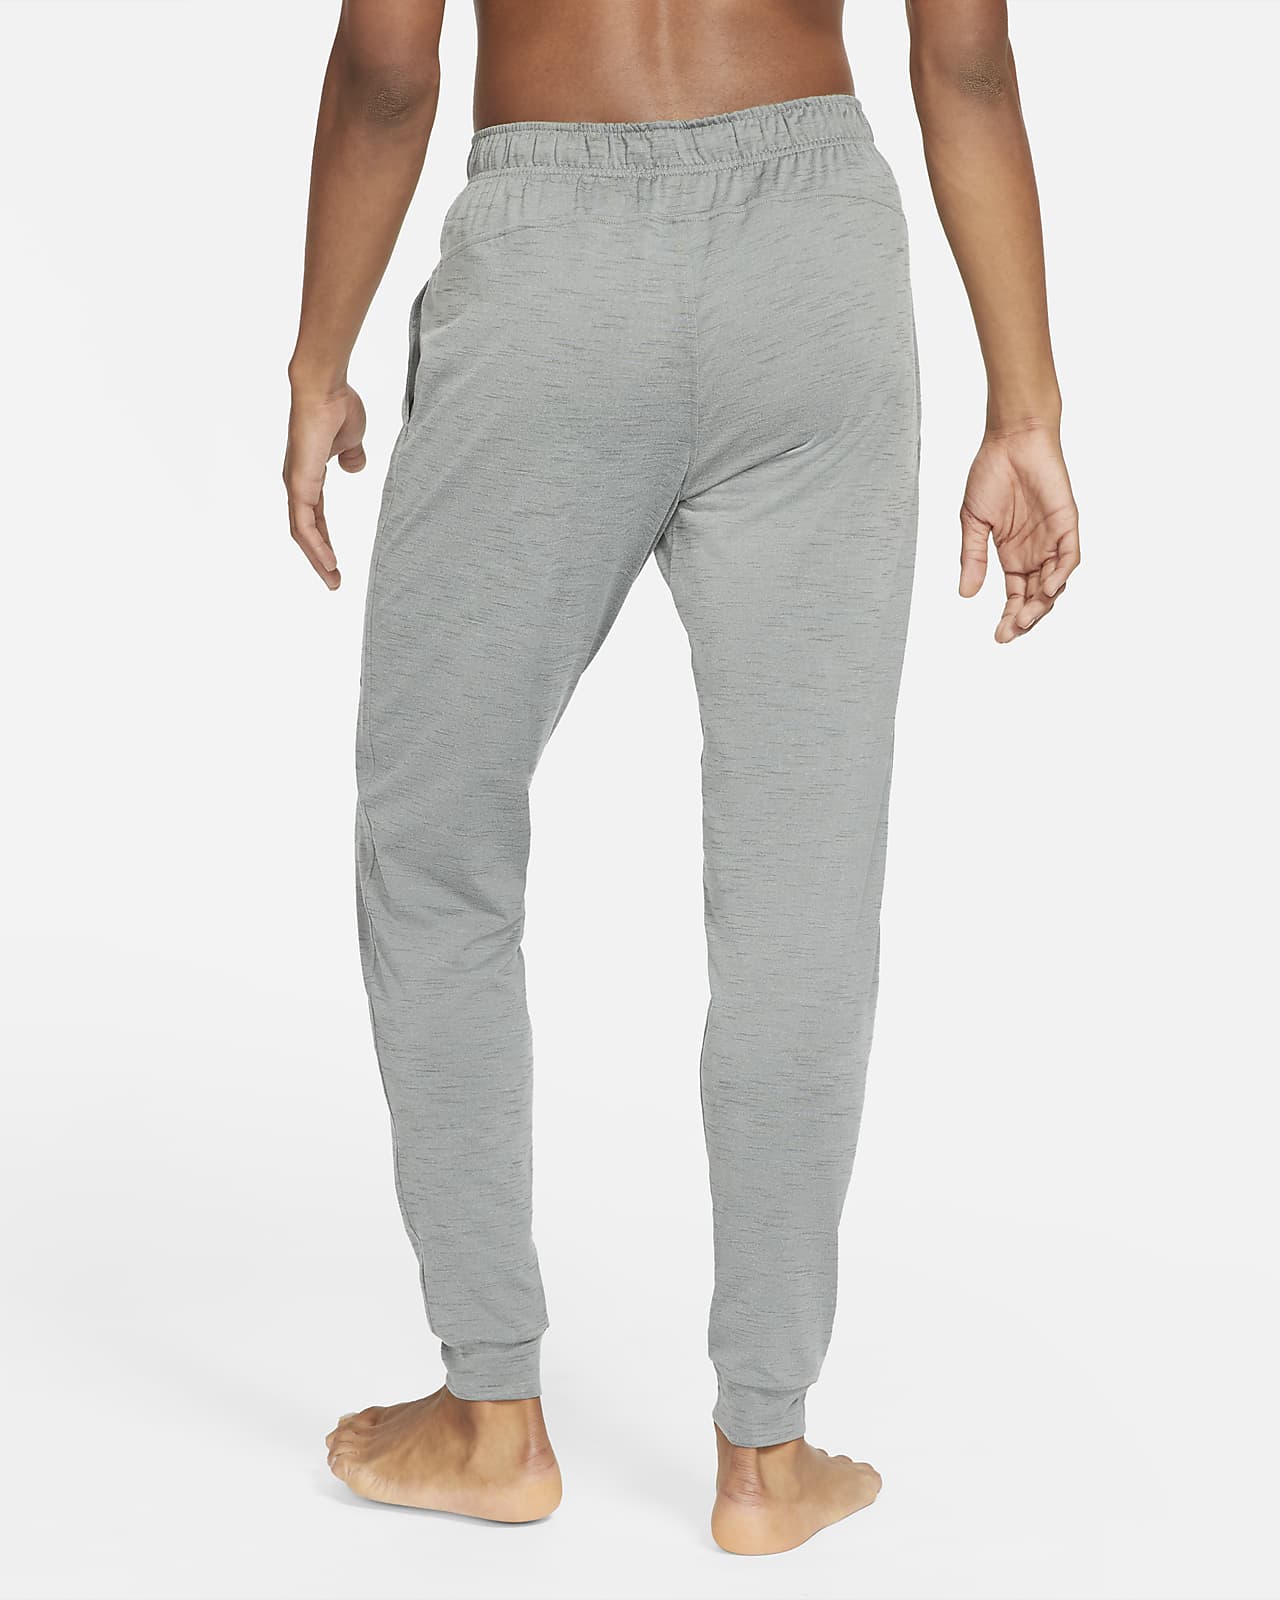 Nike Dri Fit Flex Yoga Pants Grey